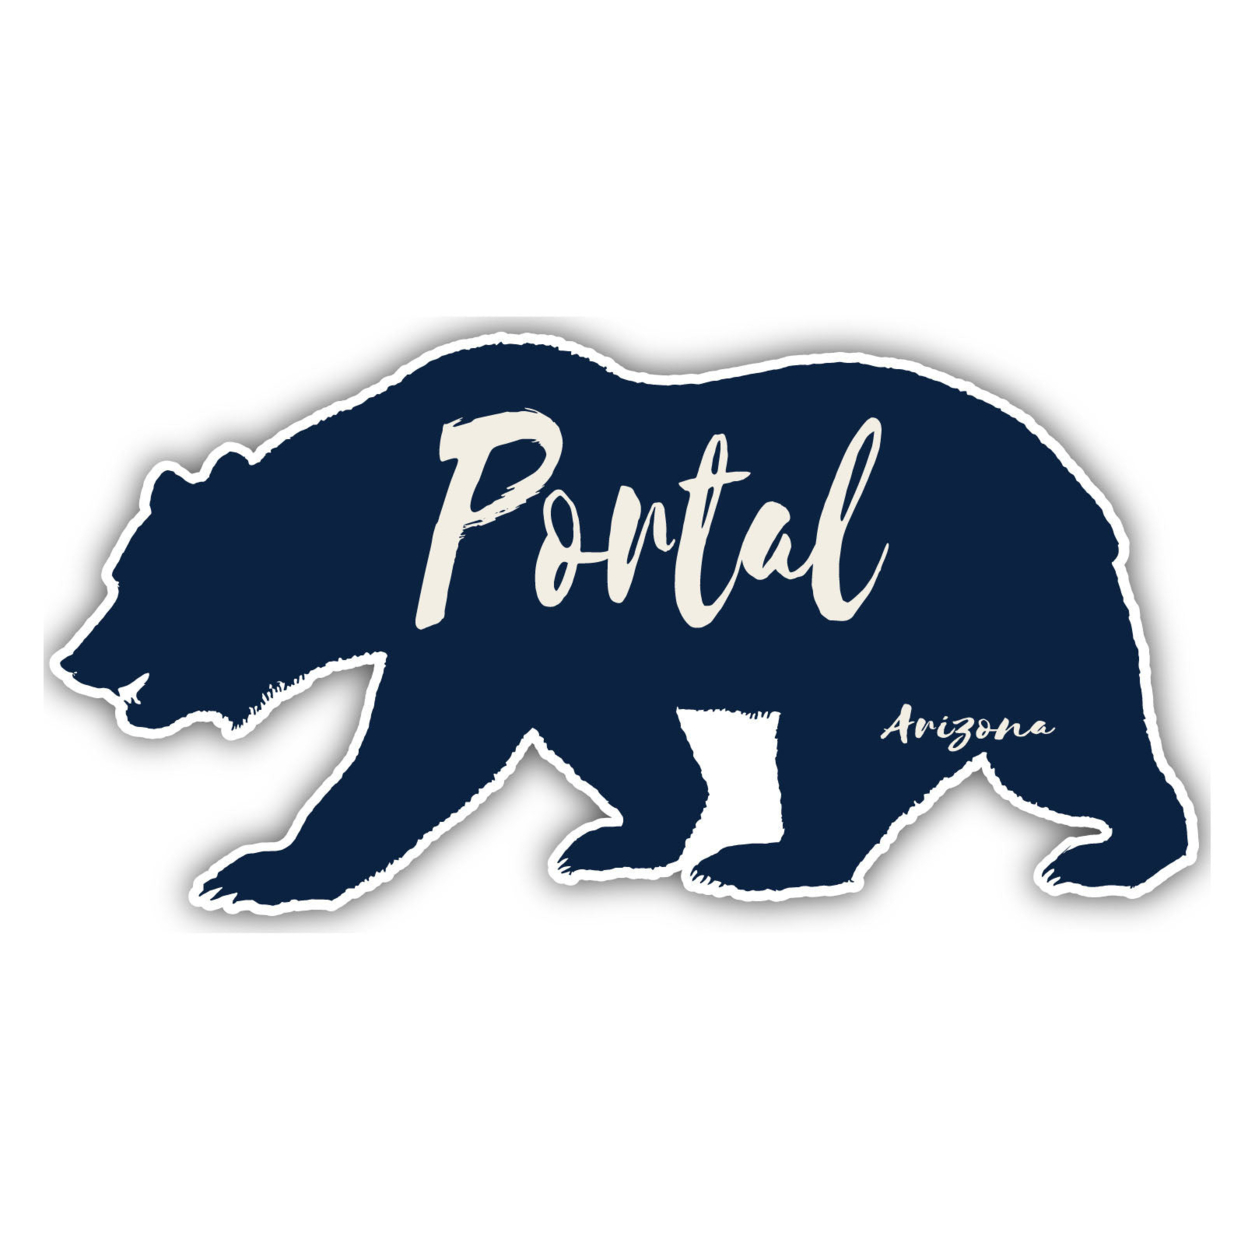 Portal Arizona Souvenir Decorative Stickers (Choose Theme And Size) - Single Unit, 2-Inch, Bear